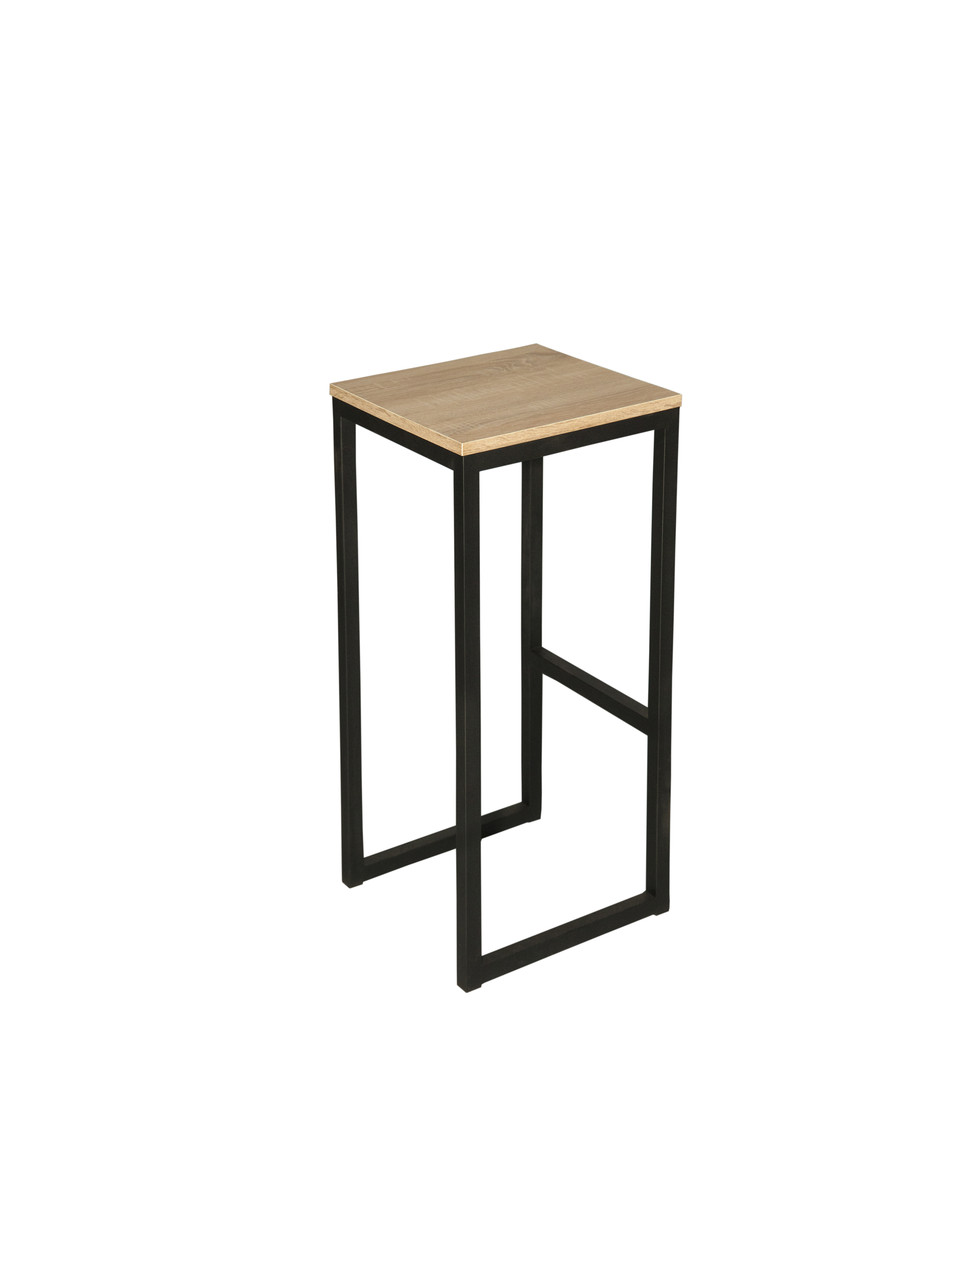 Барный стул Кубик, мебель лофт стул, лофт стілець, стульчик для бара, стілець для кафе, стілець до бару